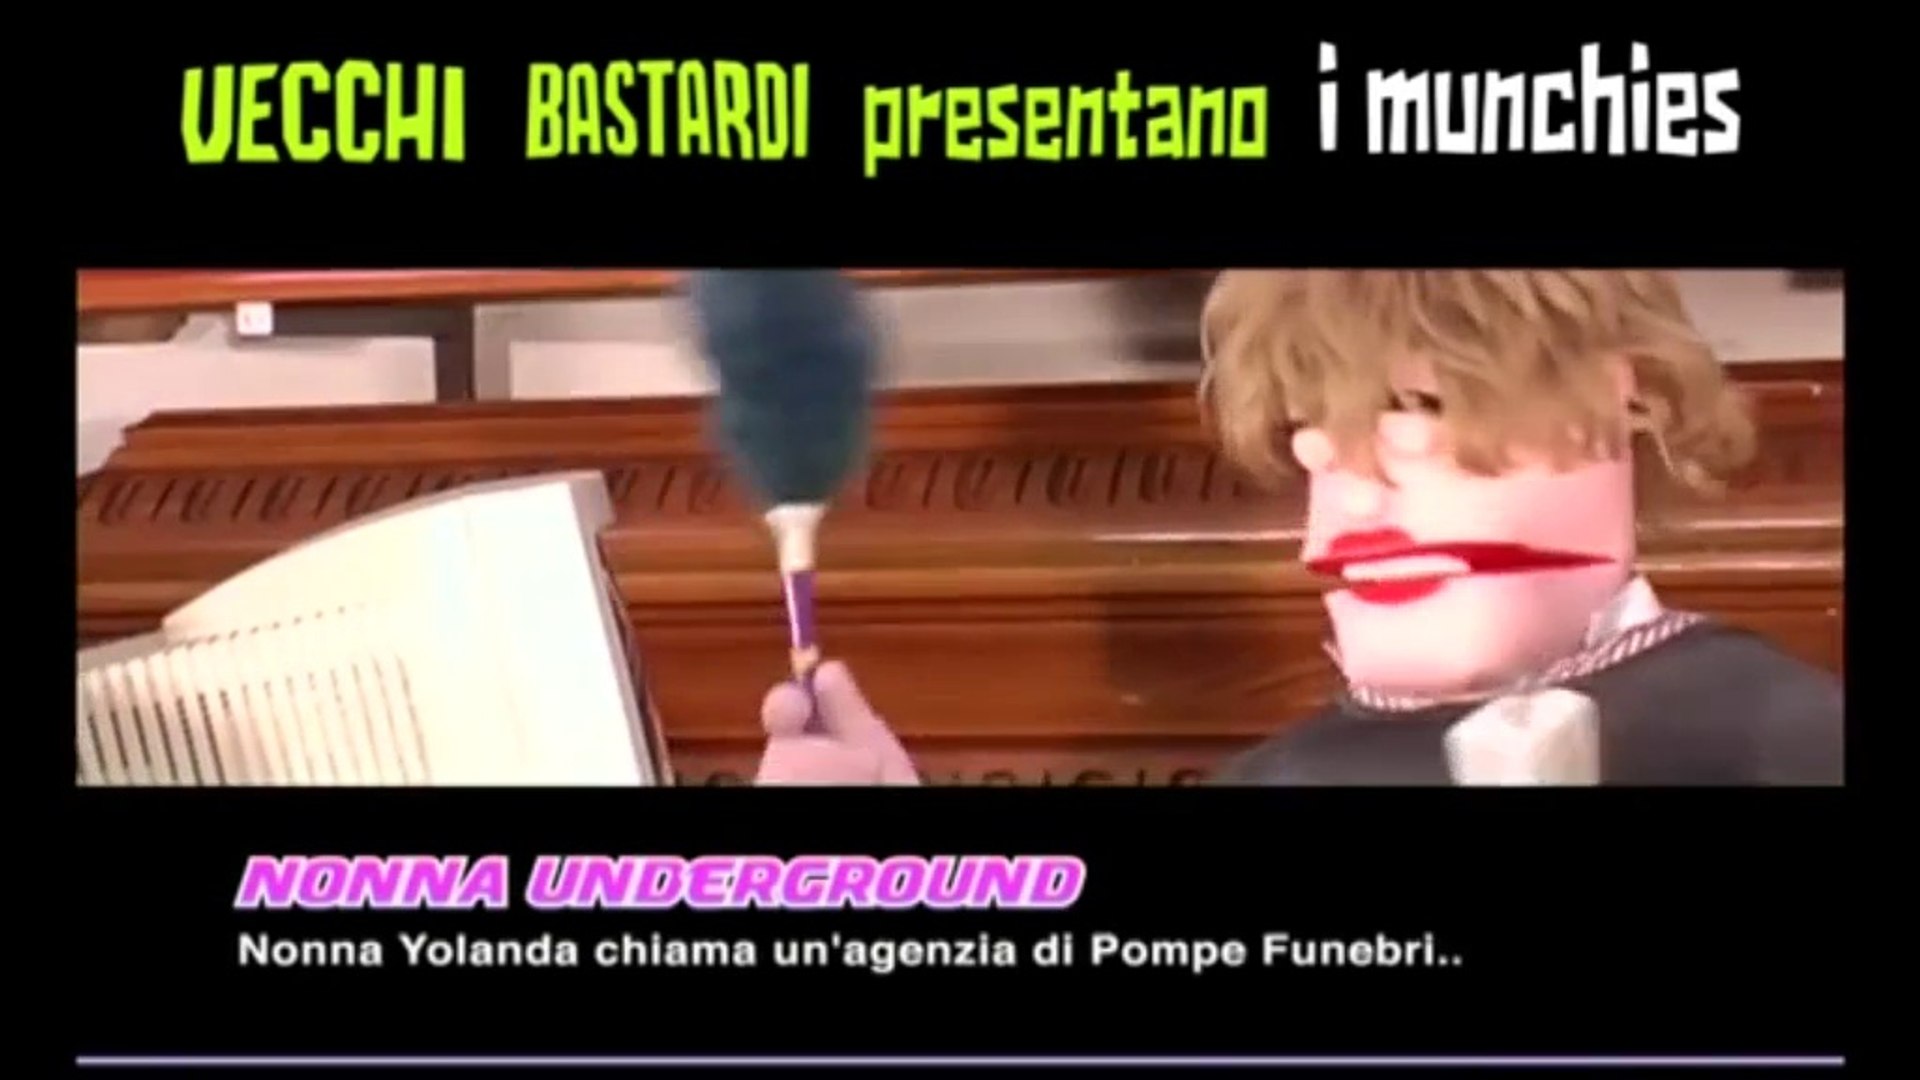 Vecchi Bastardi - I munchies (Nonna underground) - Video Dailymotion